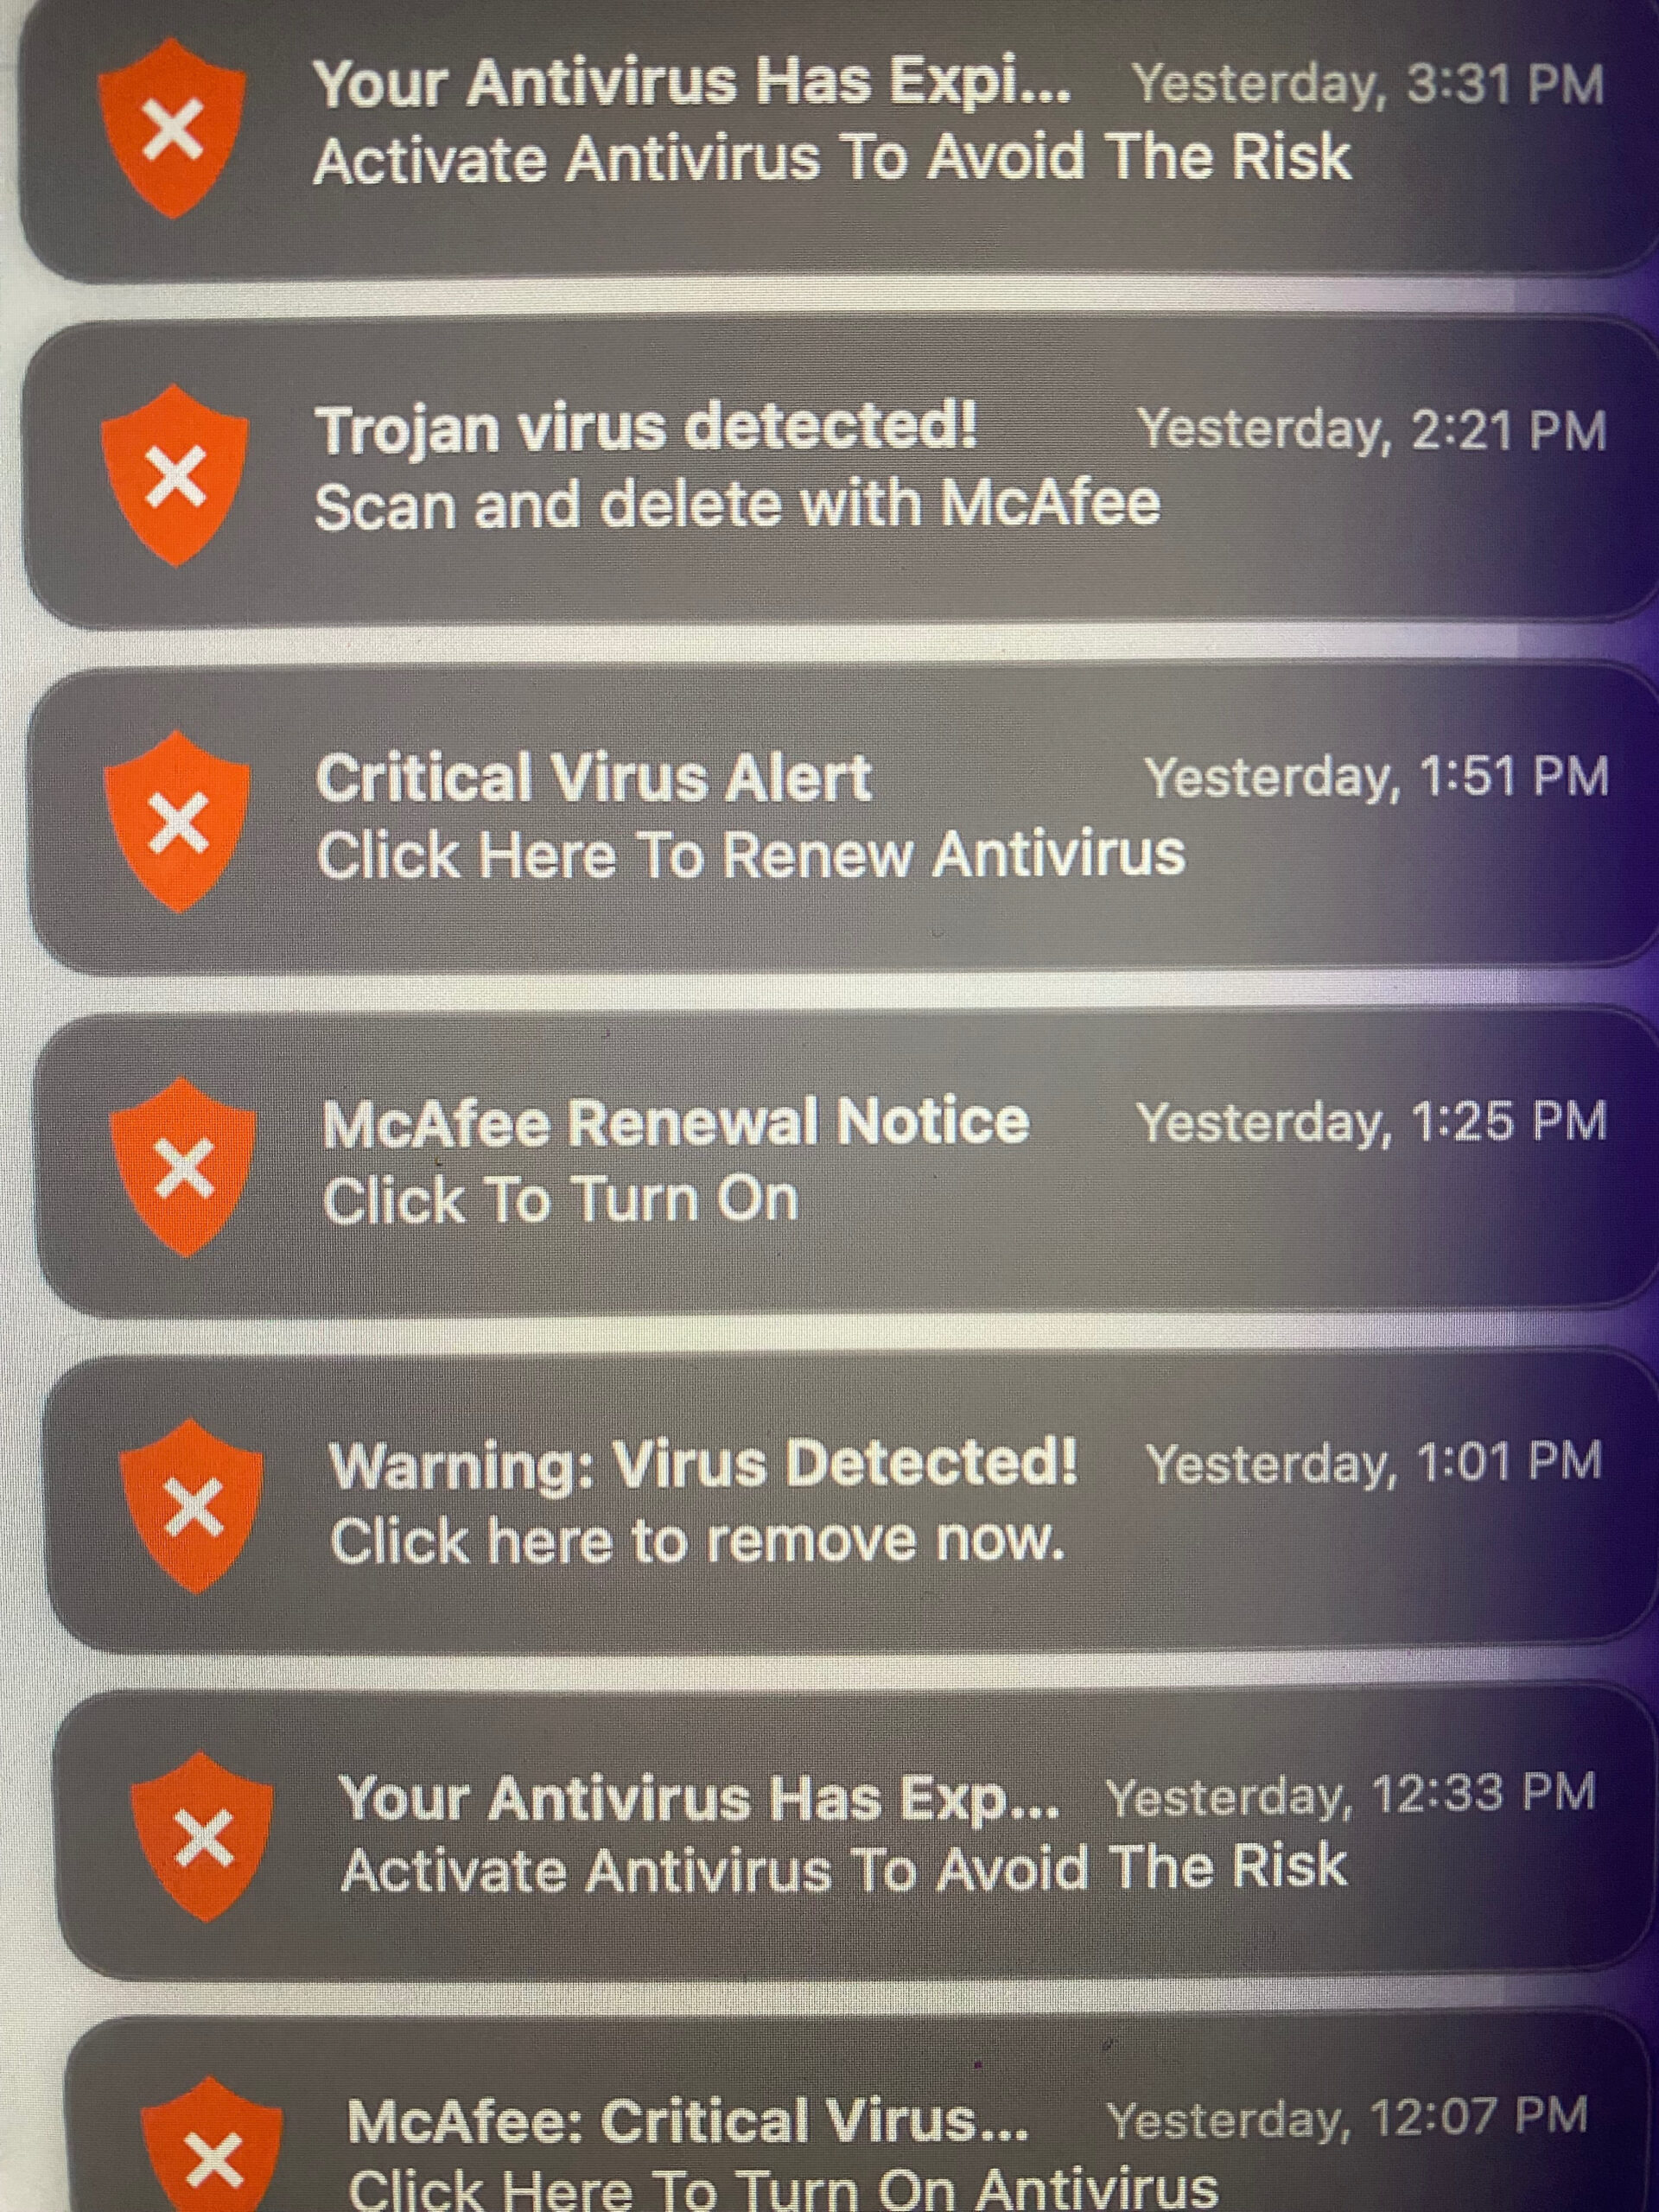 McAfee Renewal Notice [Virus Detected] Scam Mac - Fix Guide